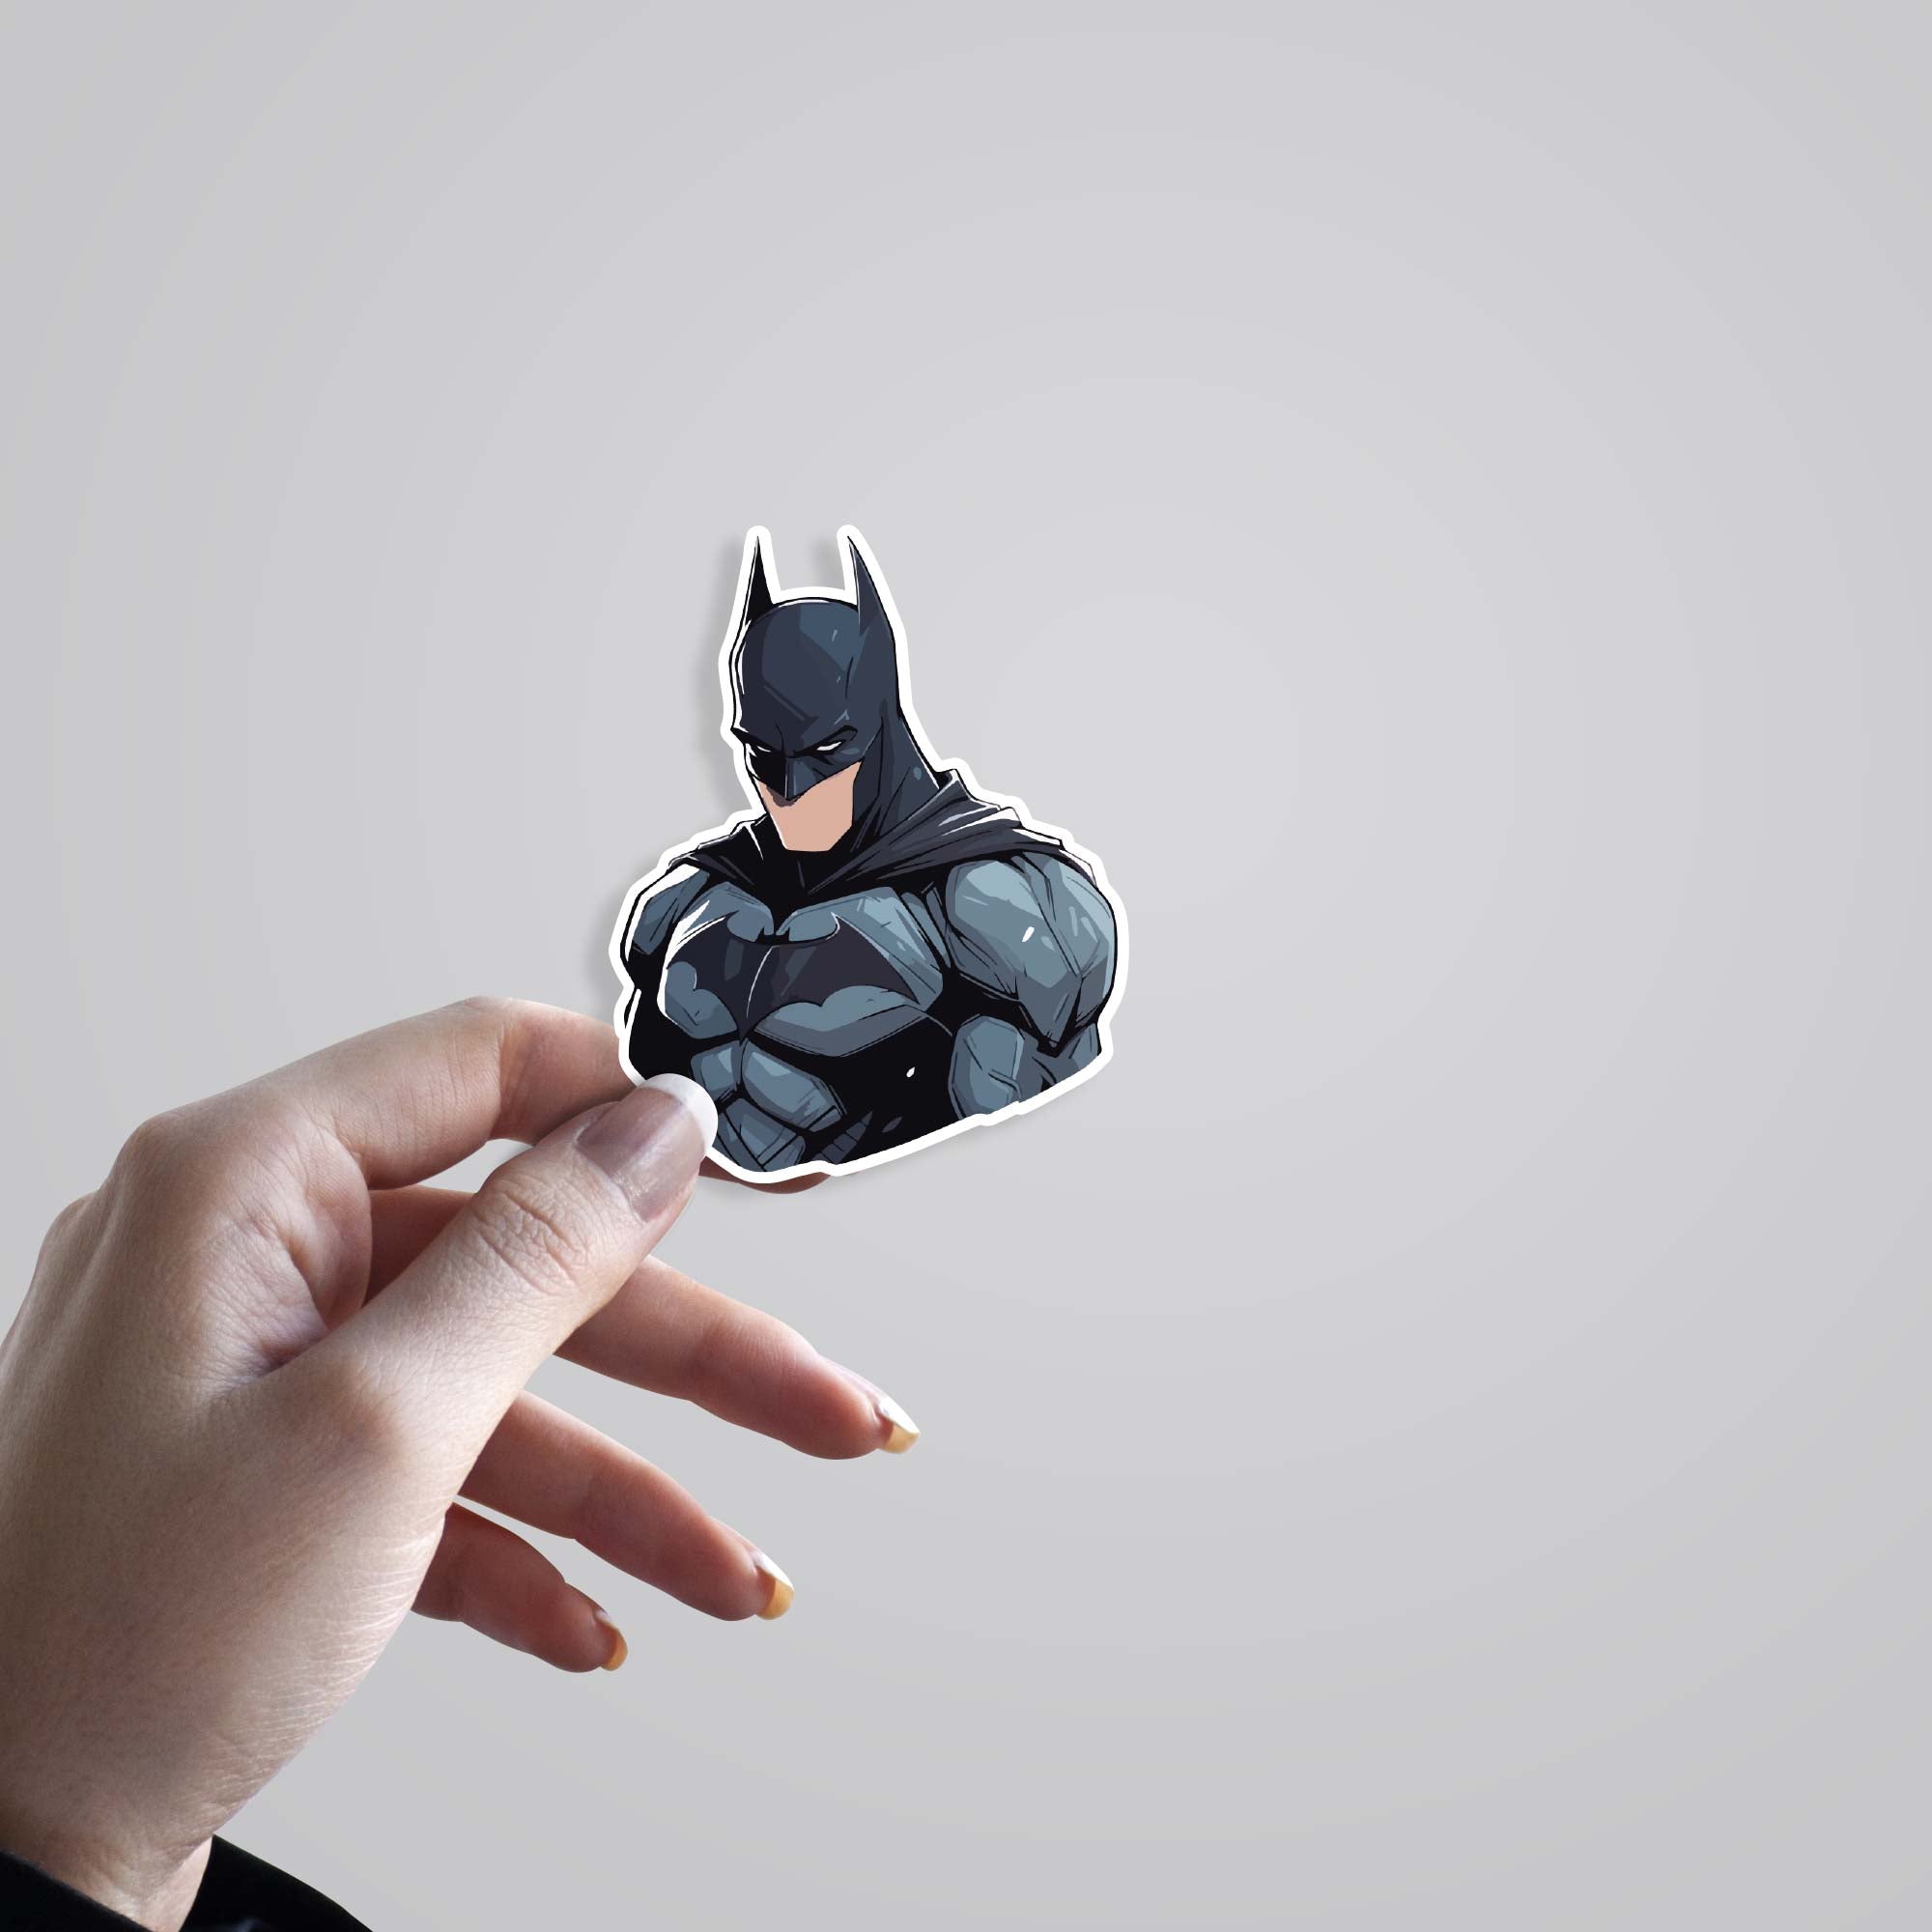 The Dark Knight Movies Stickers